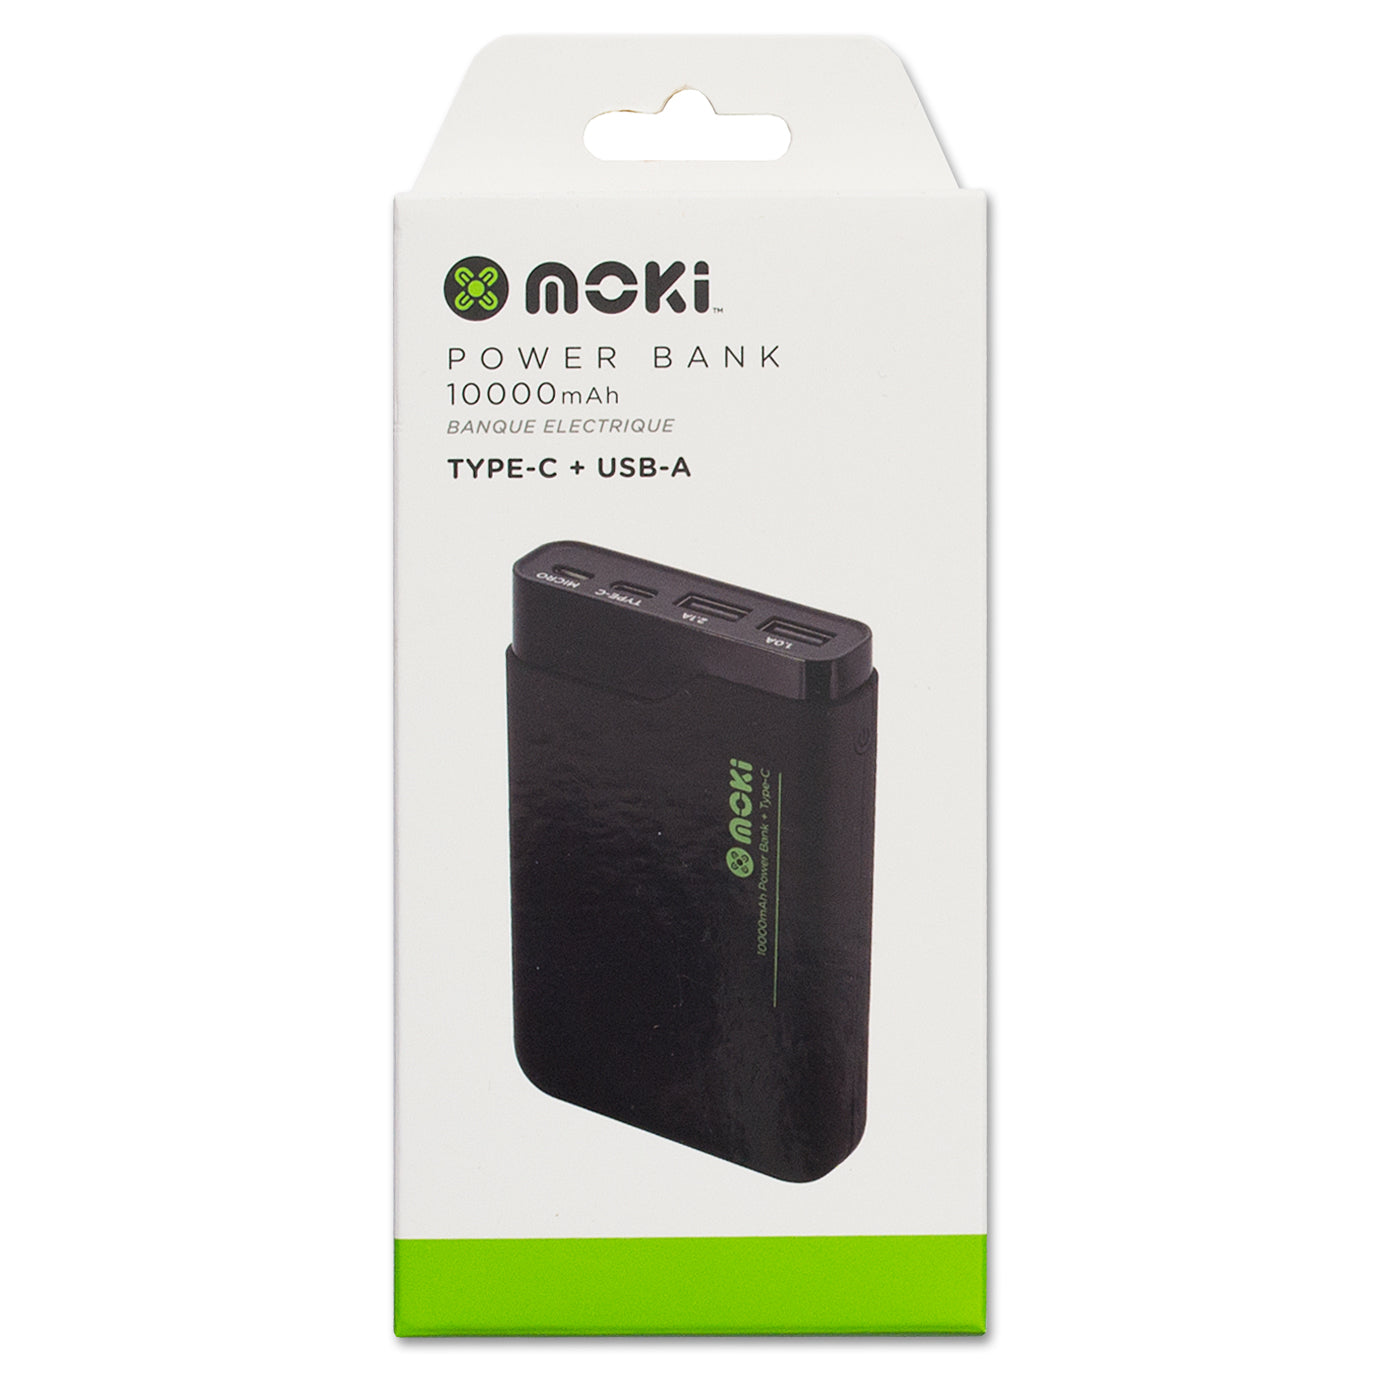 Moki Power Bank Plus 10000mAh USB + Type-C Fast Charge